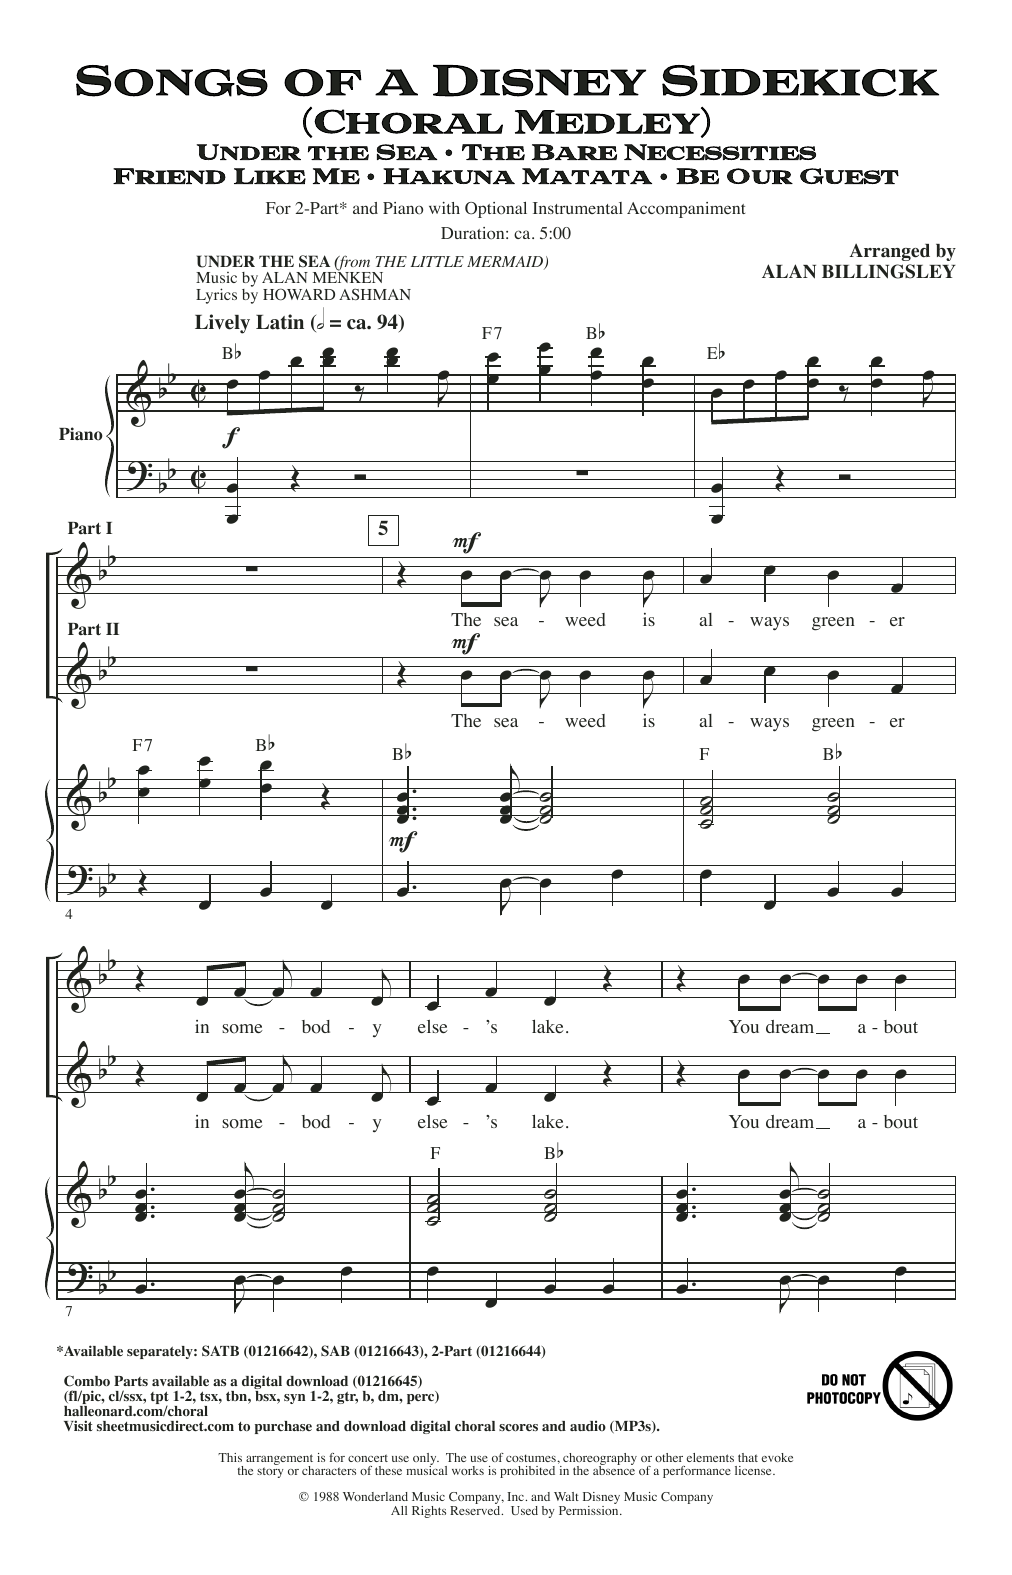 Alan Billingsley Songs Of A Disney Sidekick (Choral Medley) Sheet Music Notes & Chords for SATB Choir - Download or Print PDF